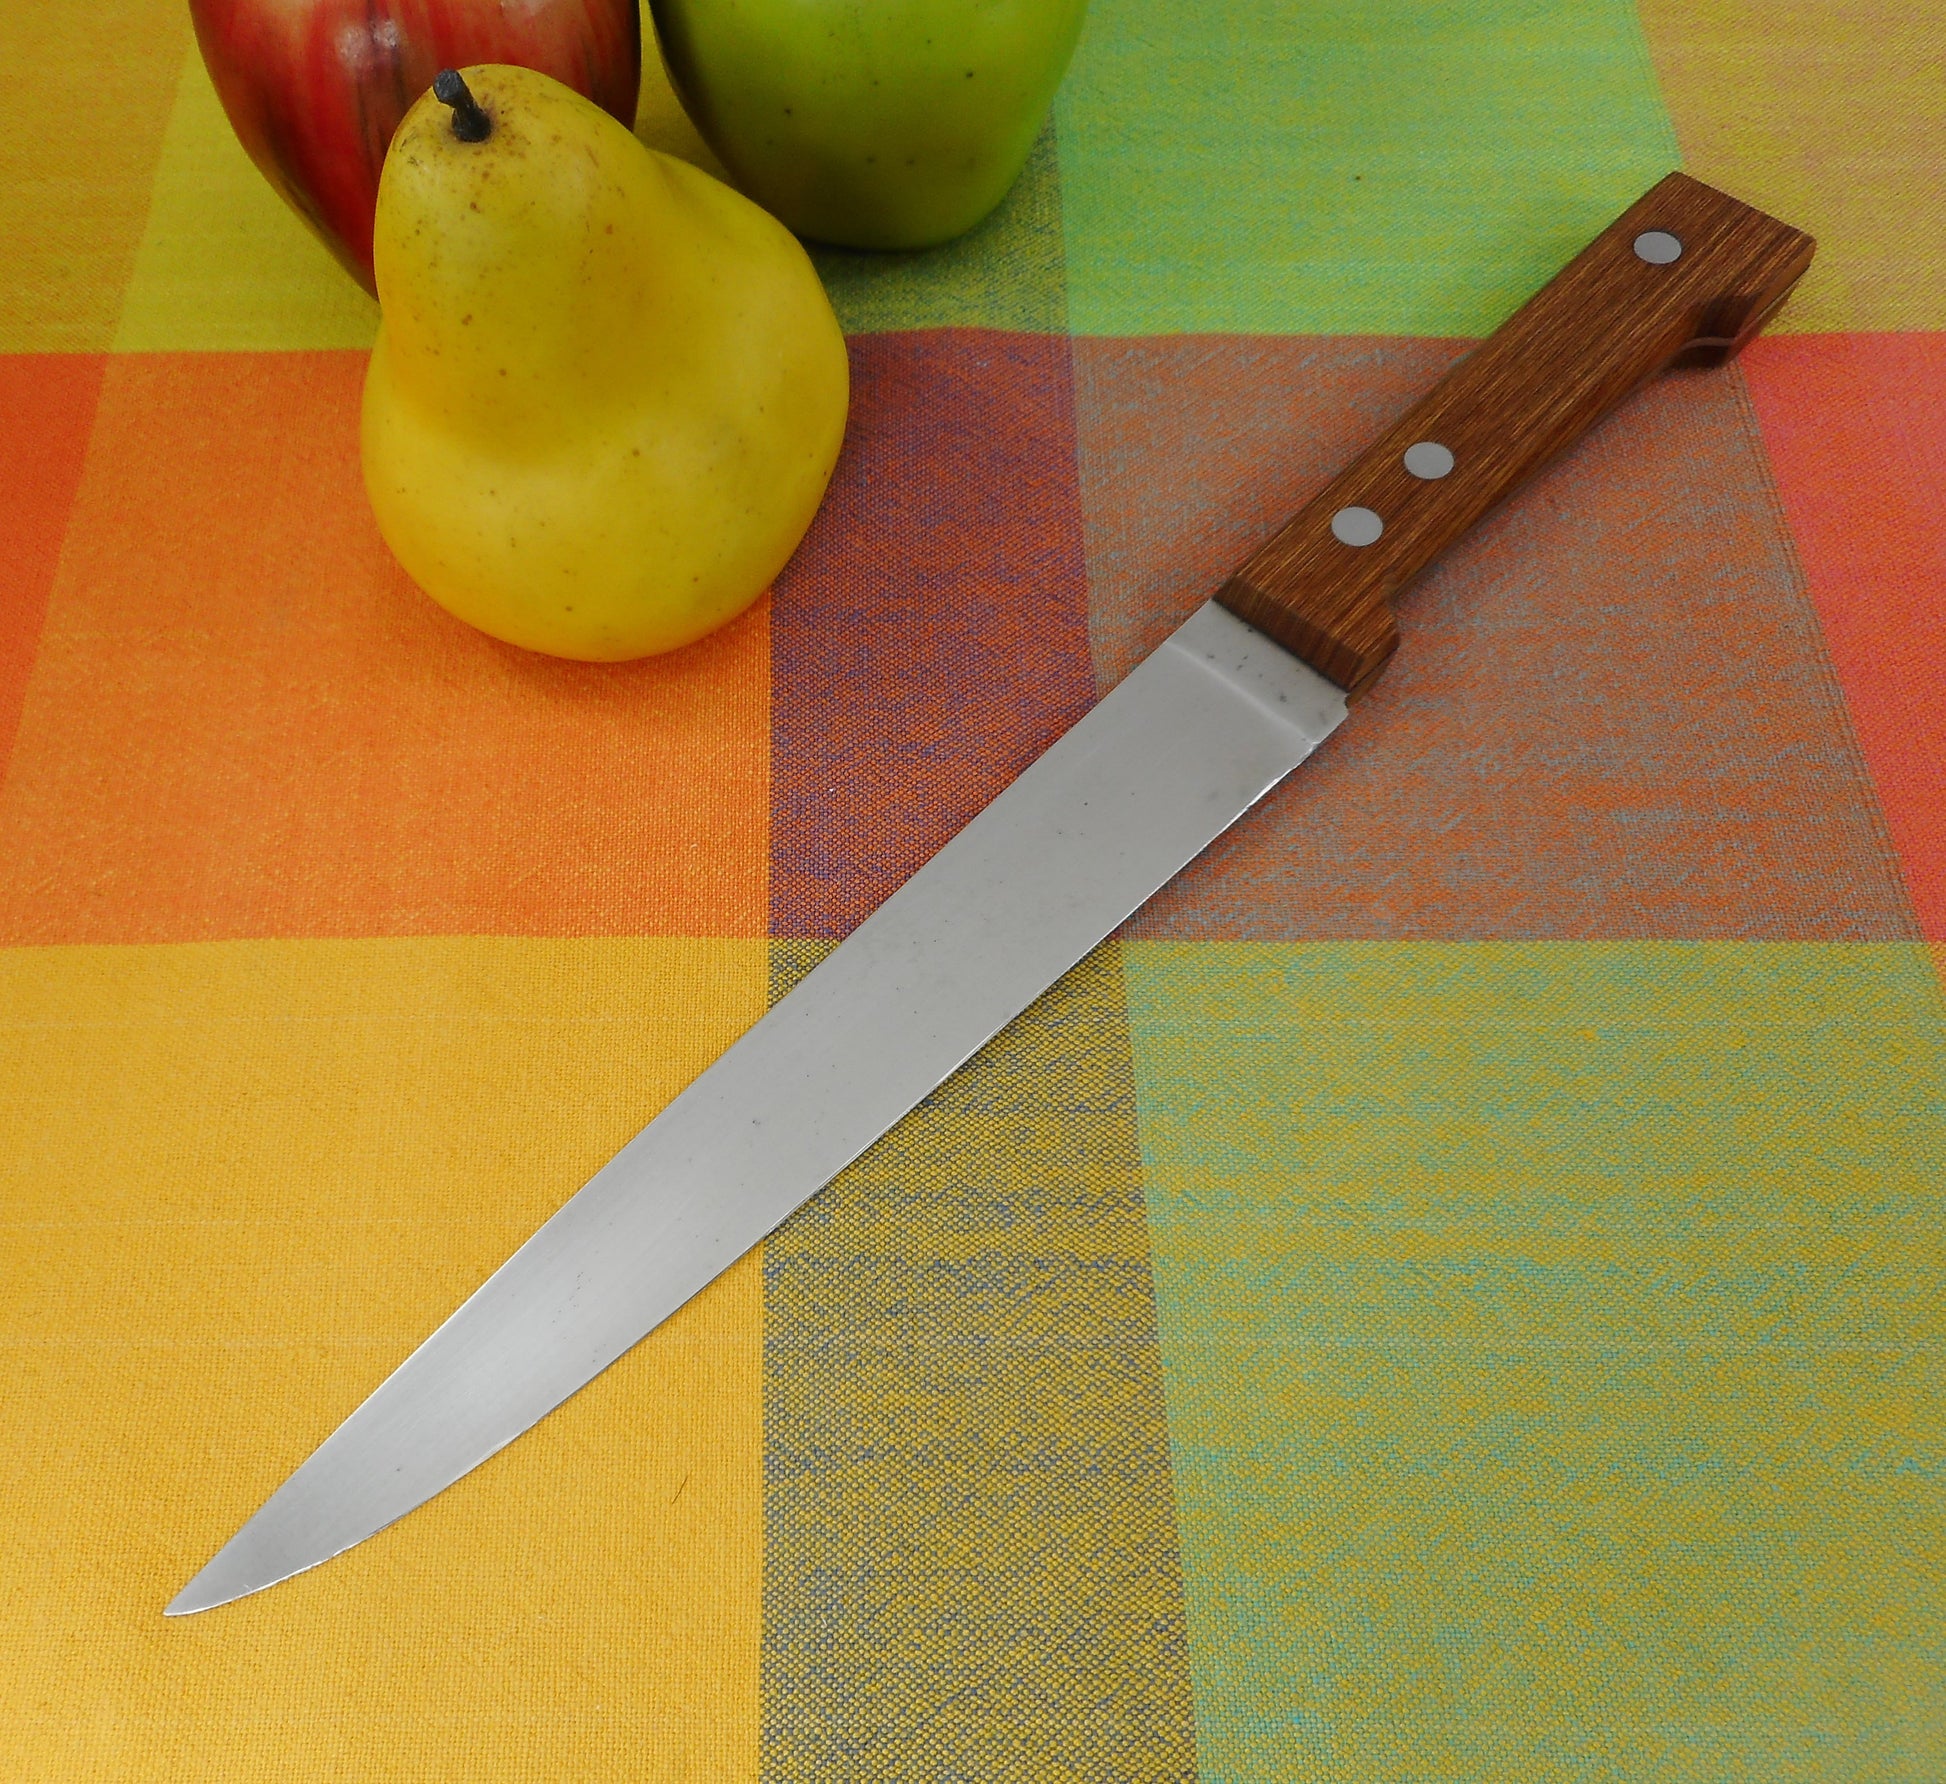 Dansk Gunnar Cyren KItchen Knives - Stainless Slicing Carving - Teak Handle 8" Blade